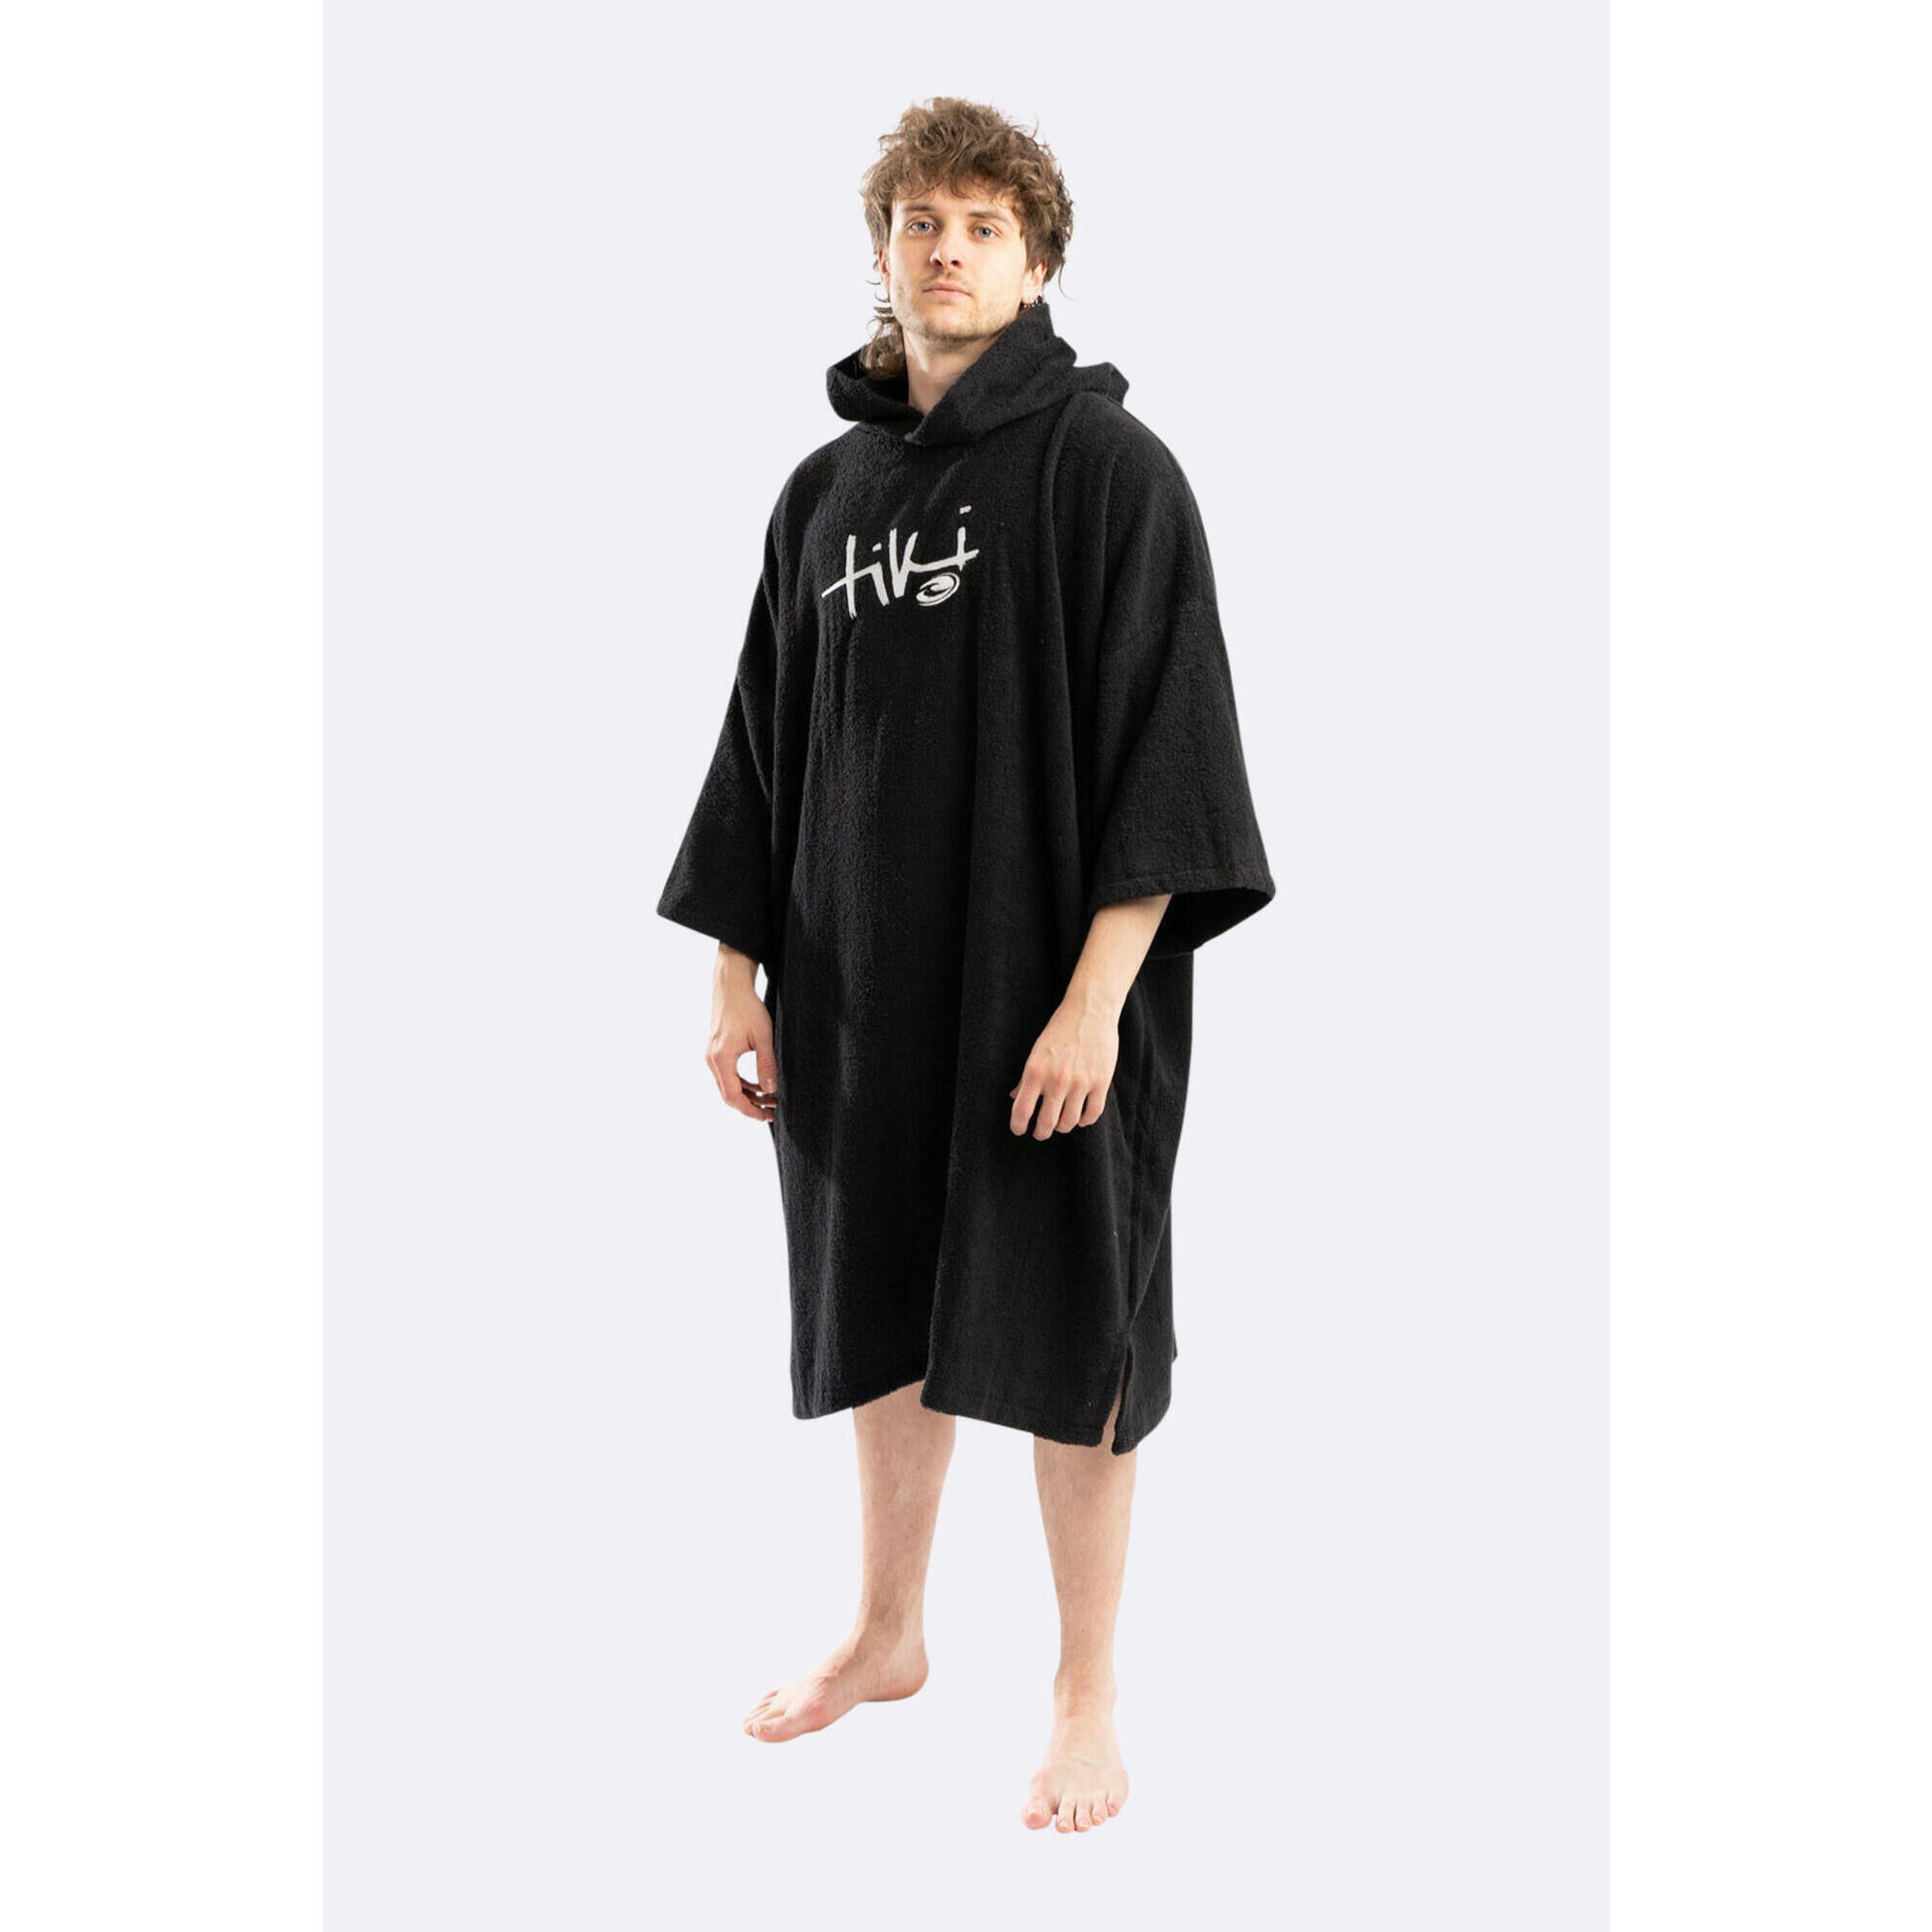 TIKI SURF Adults Hooded Change Robe - Black